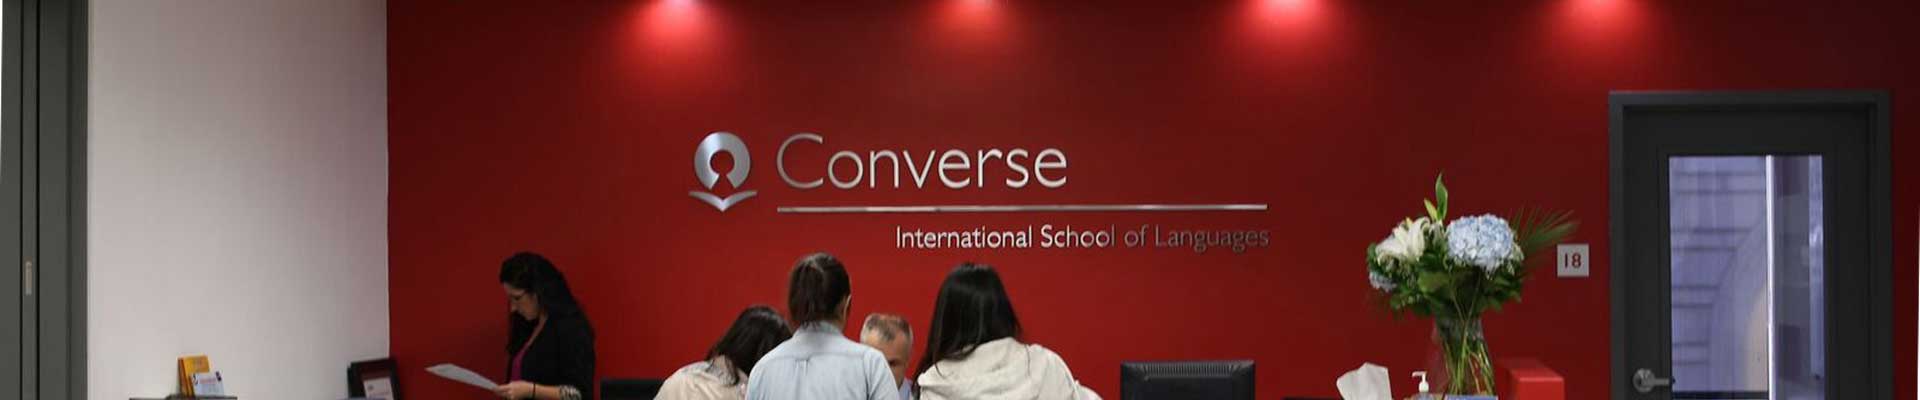 Converse International School of Languages - San Diego görseli